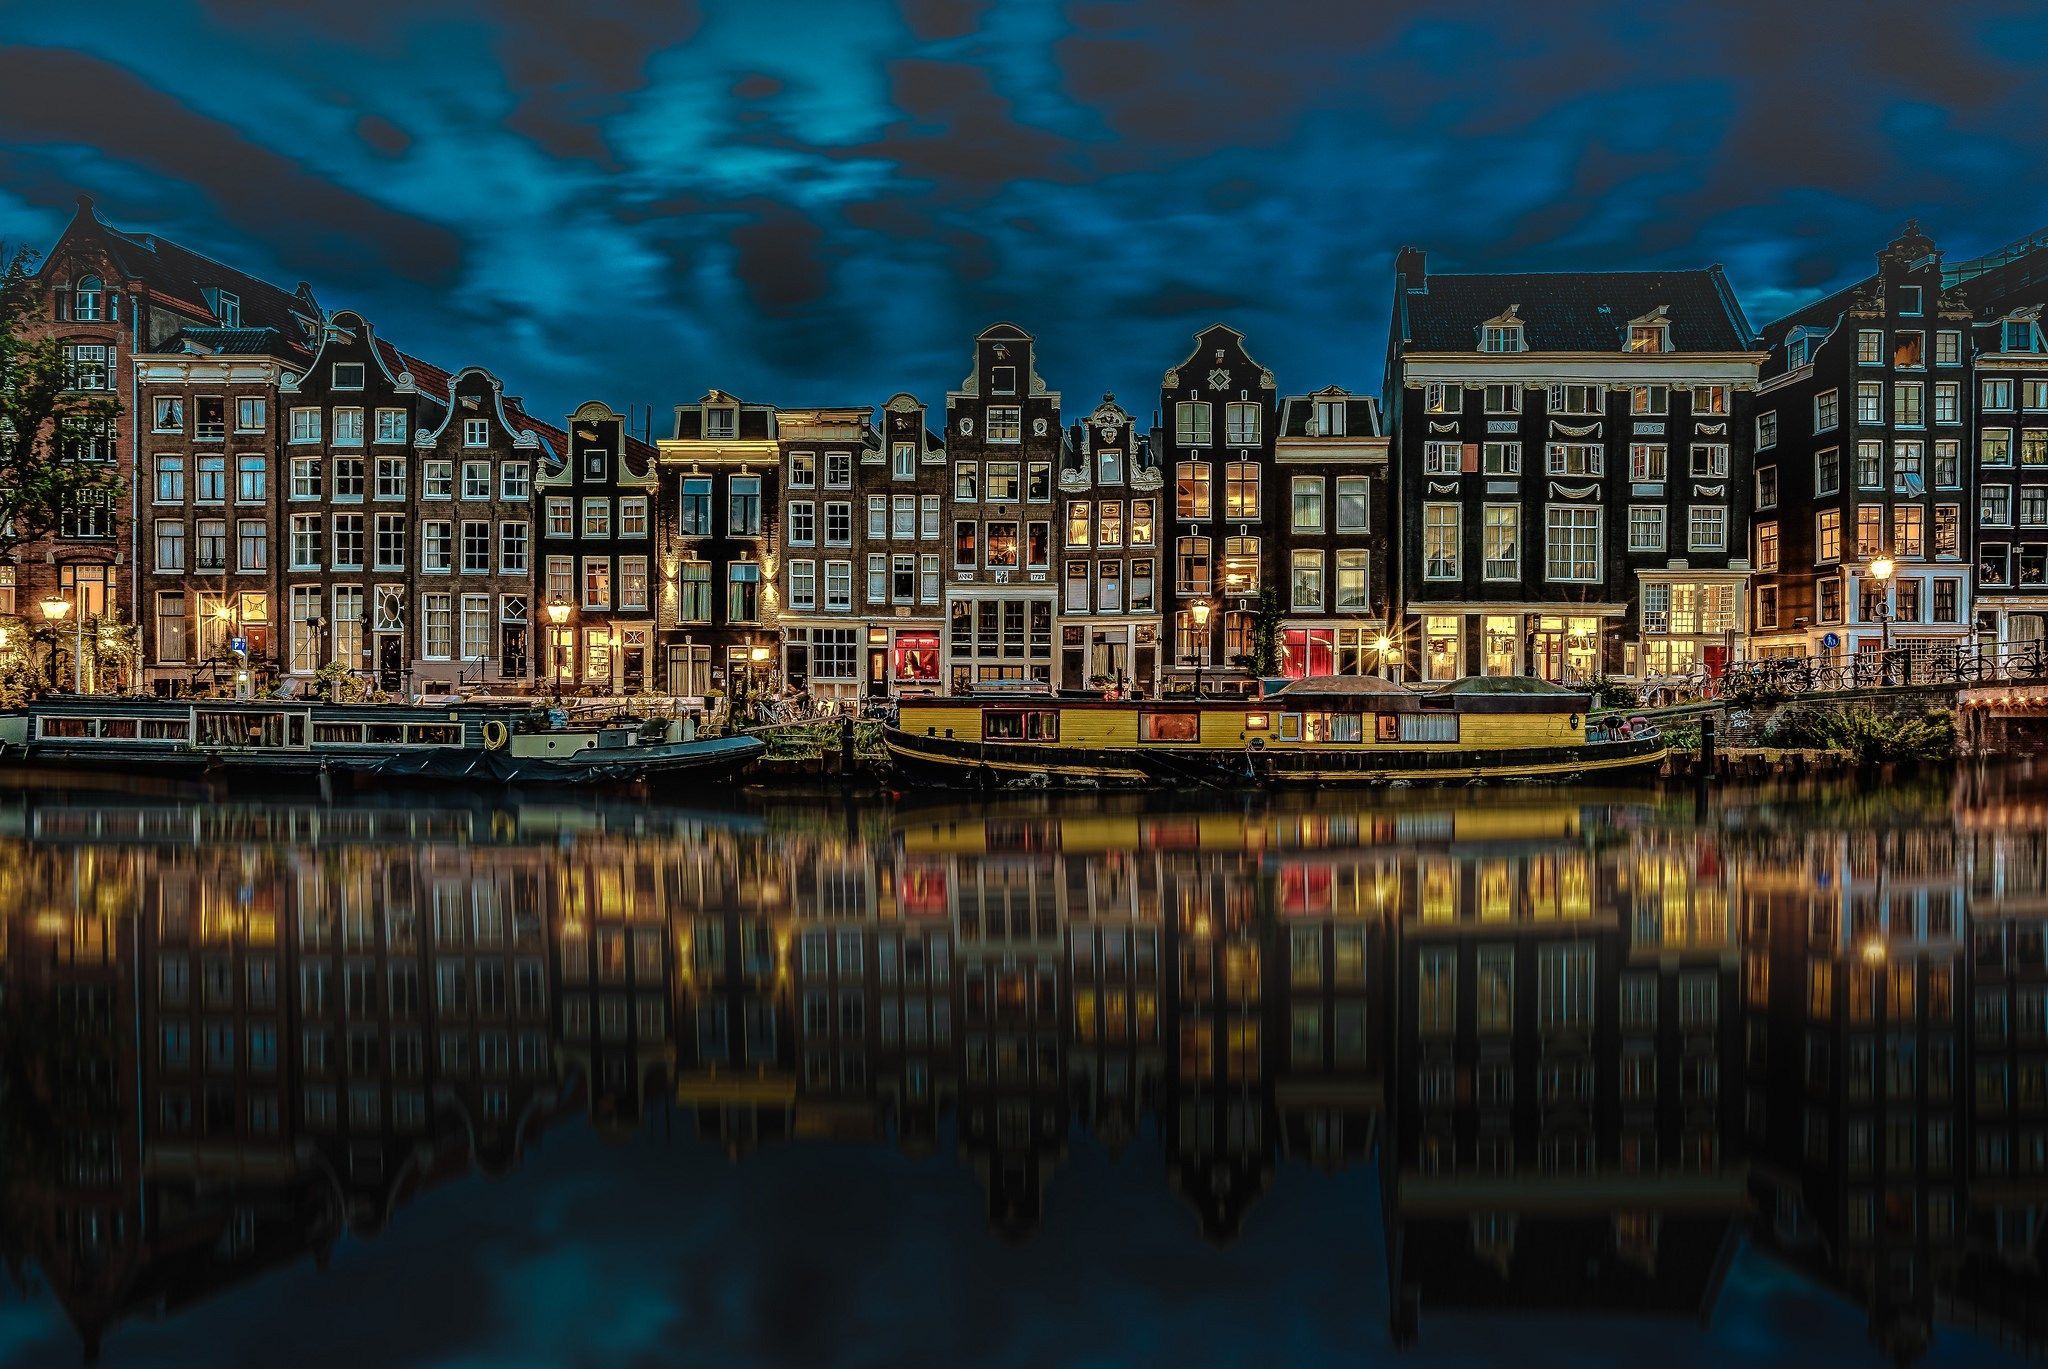 px amsterdam wallpaper 1080p high quality